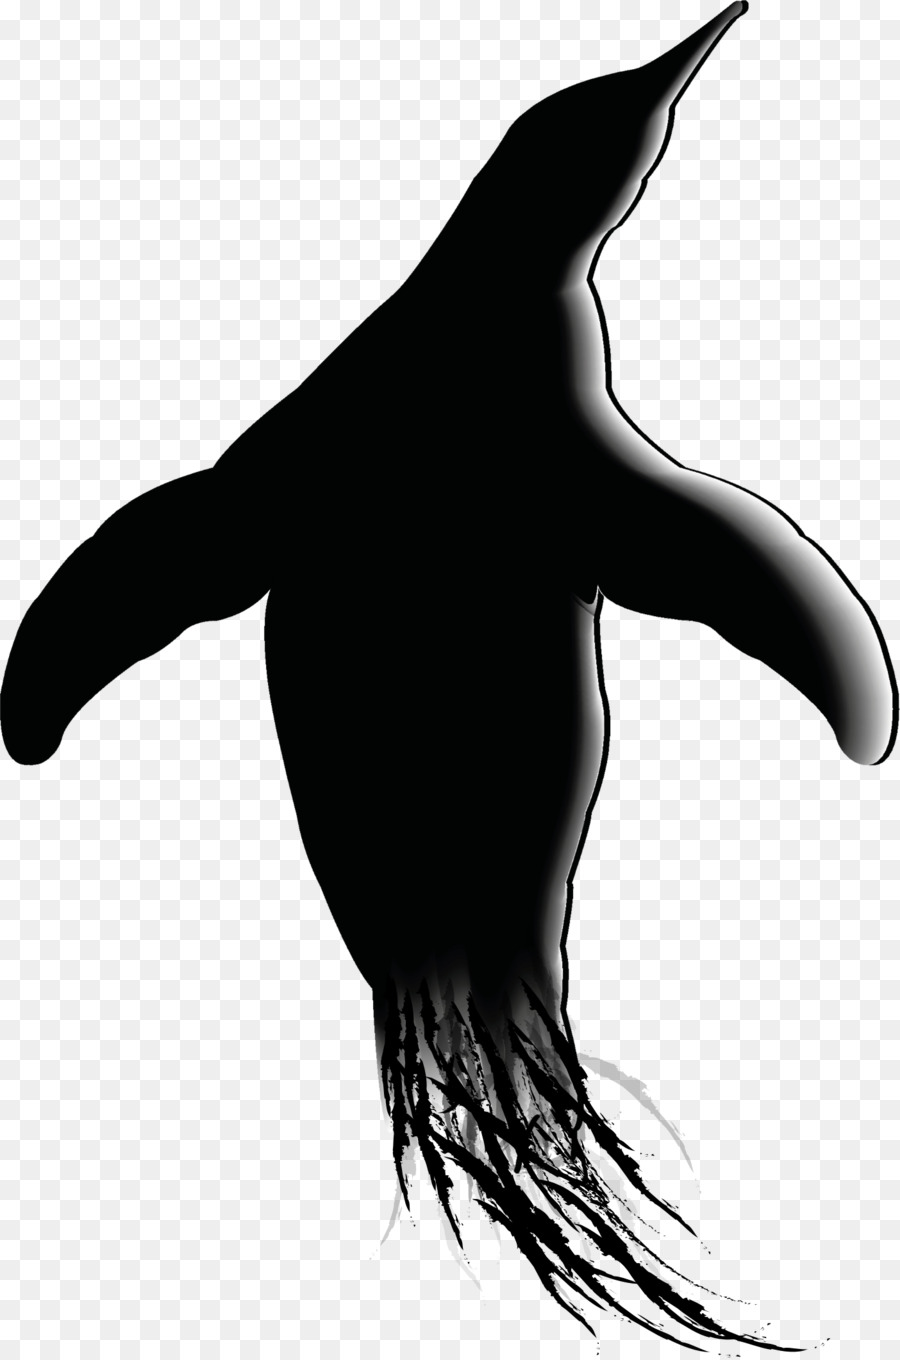 Penguin Sea lion Silhouette Clip art - Penguin png download - 1404*2118 - Free Transparent Penguin png Download.